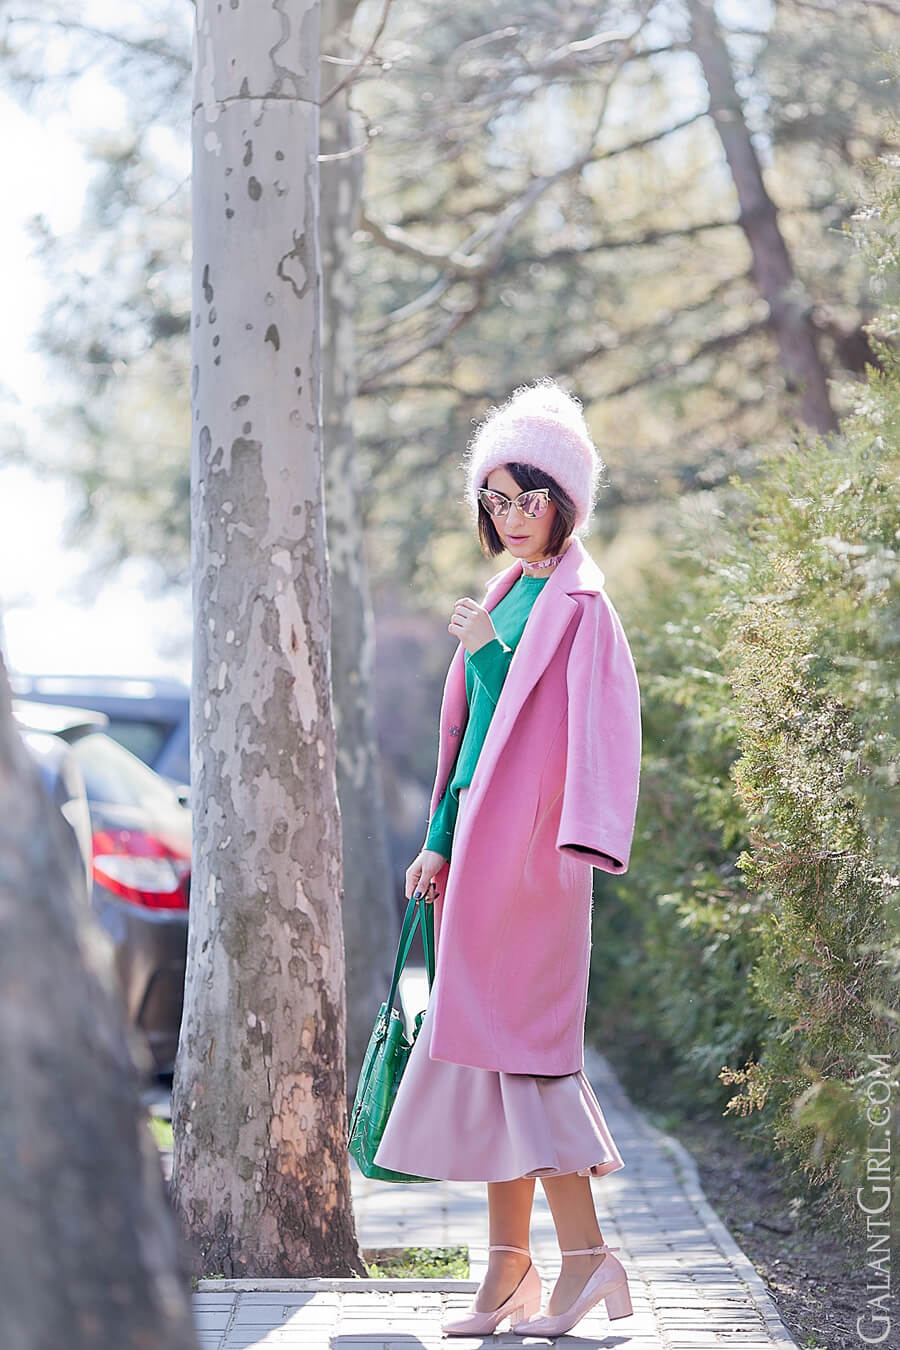 diane-von-furstenberg-bag and pink coat outfit for spring 2016